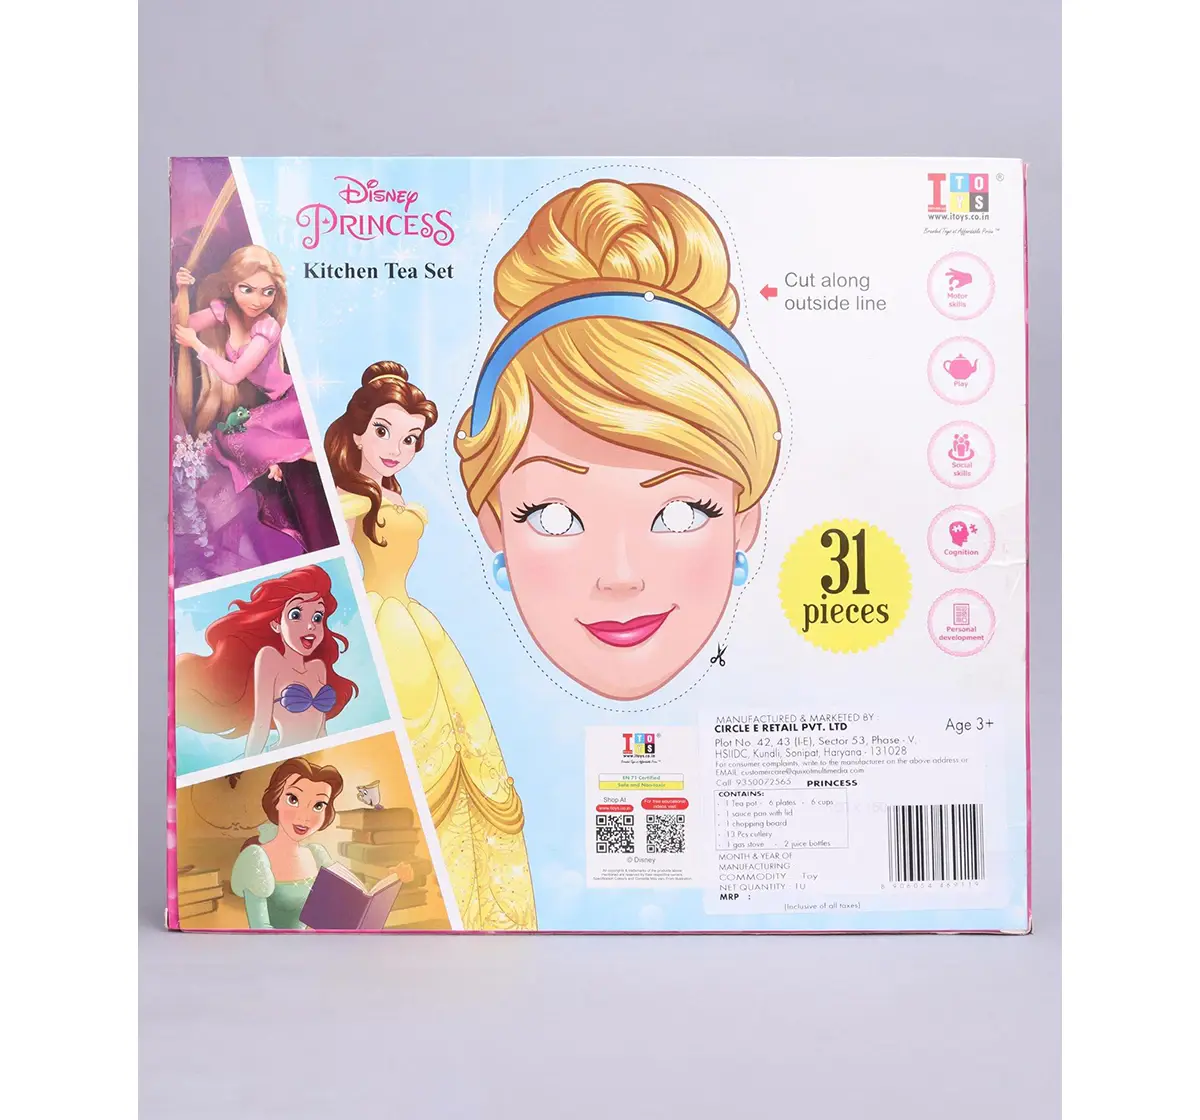 IToys Disney Princess Tea Party Set For Kids age 3Y+